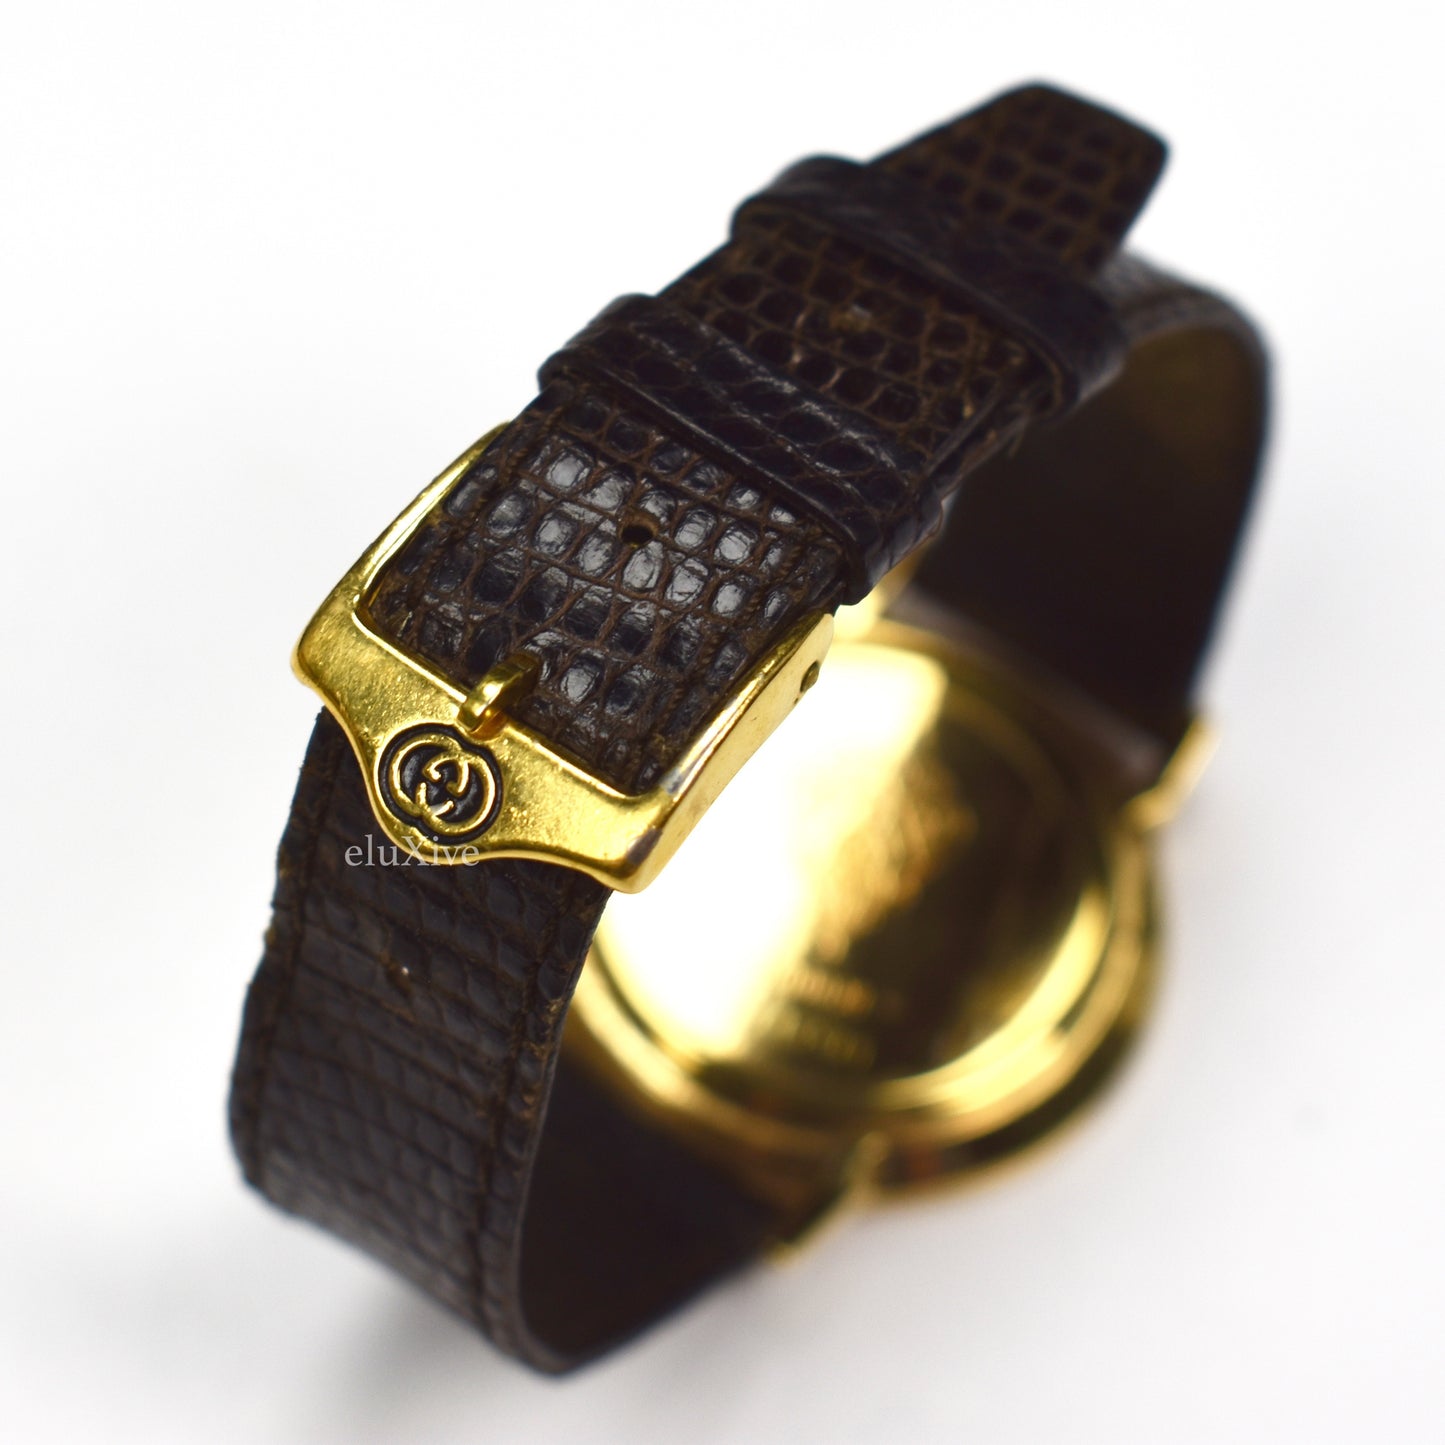 Gucci - 3000M Web Stripe Watch